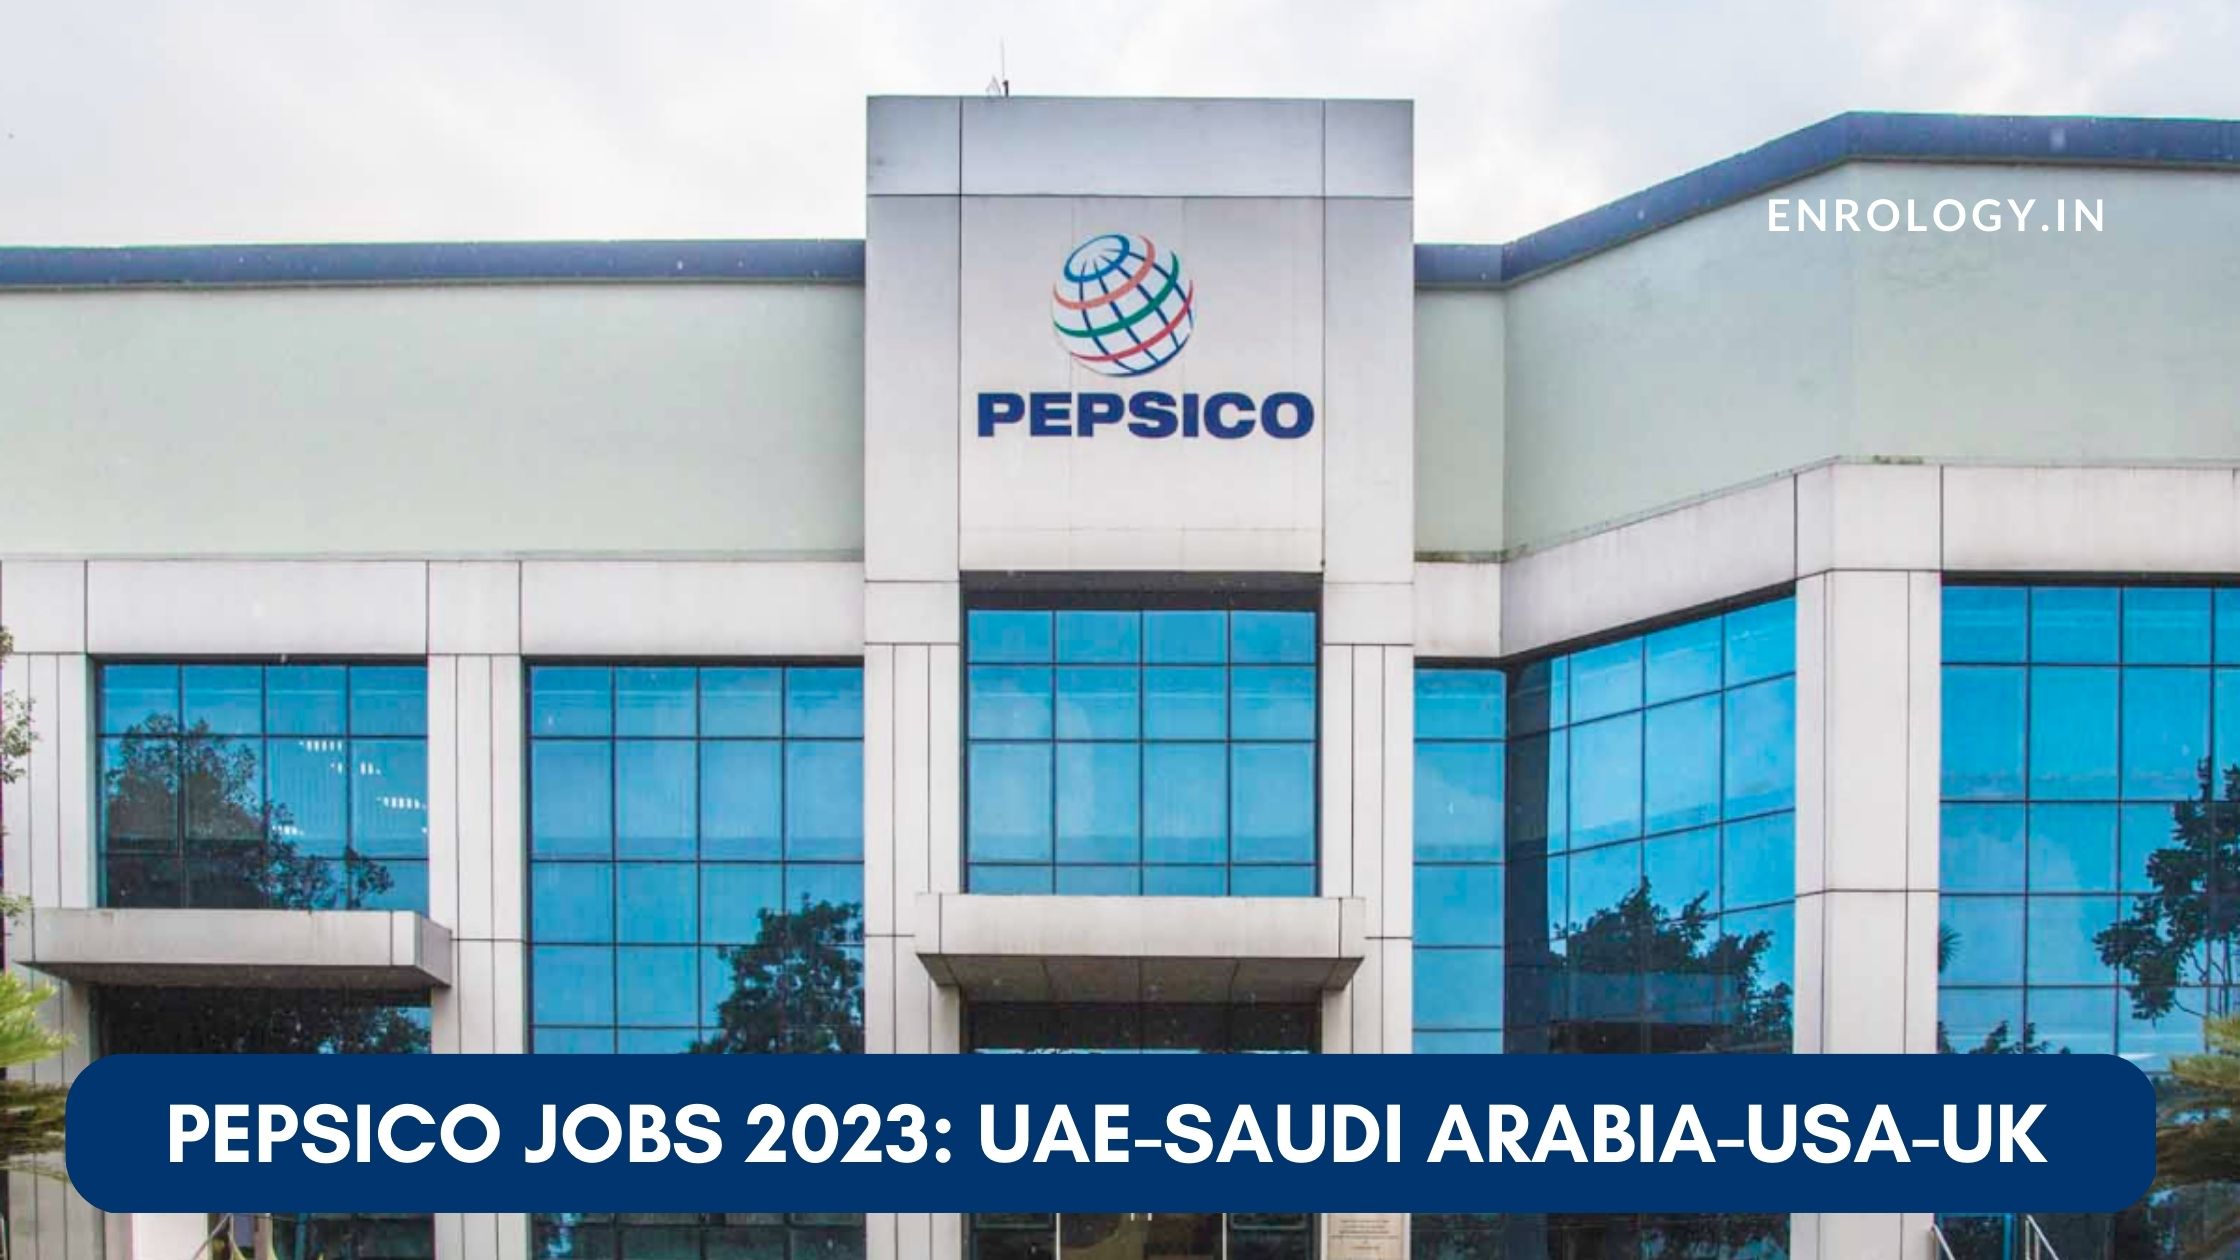 PepsiCo Jobs 2023: UAE-Saudi Arabia-USA-UK